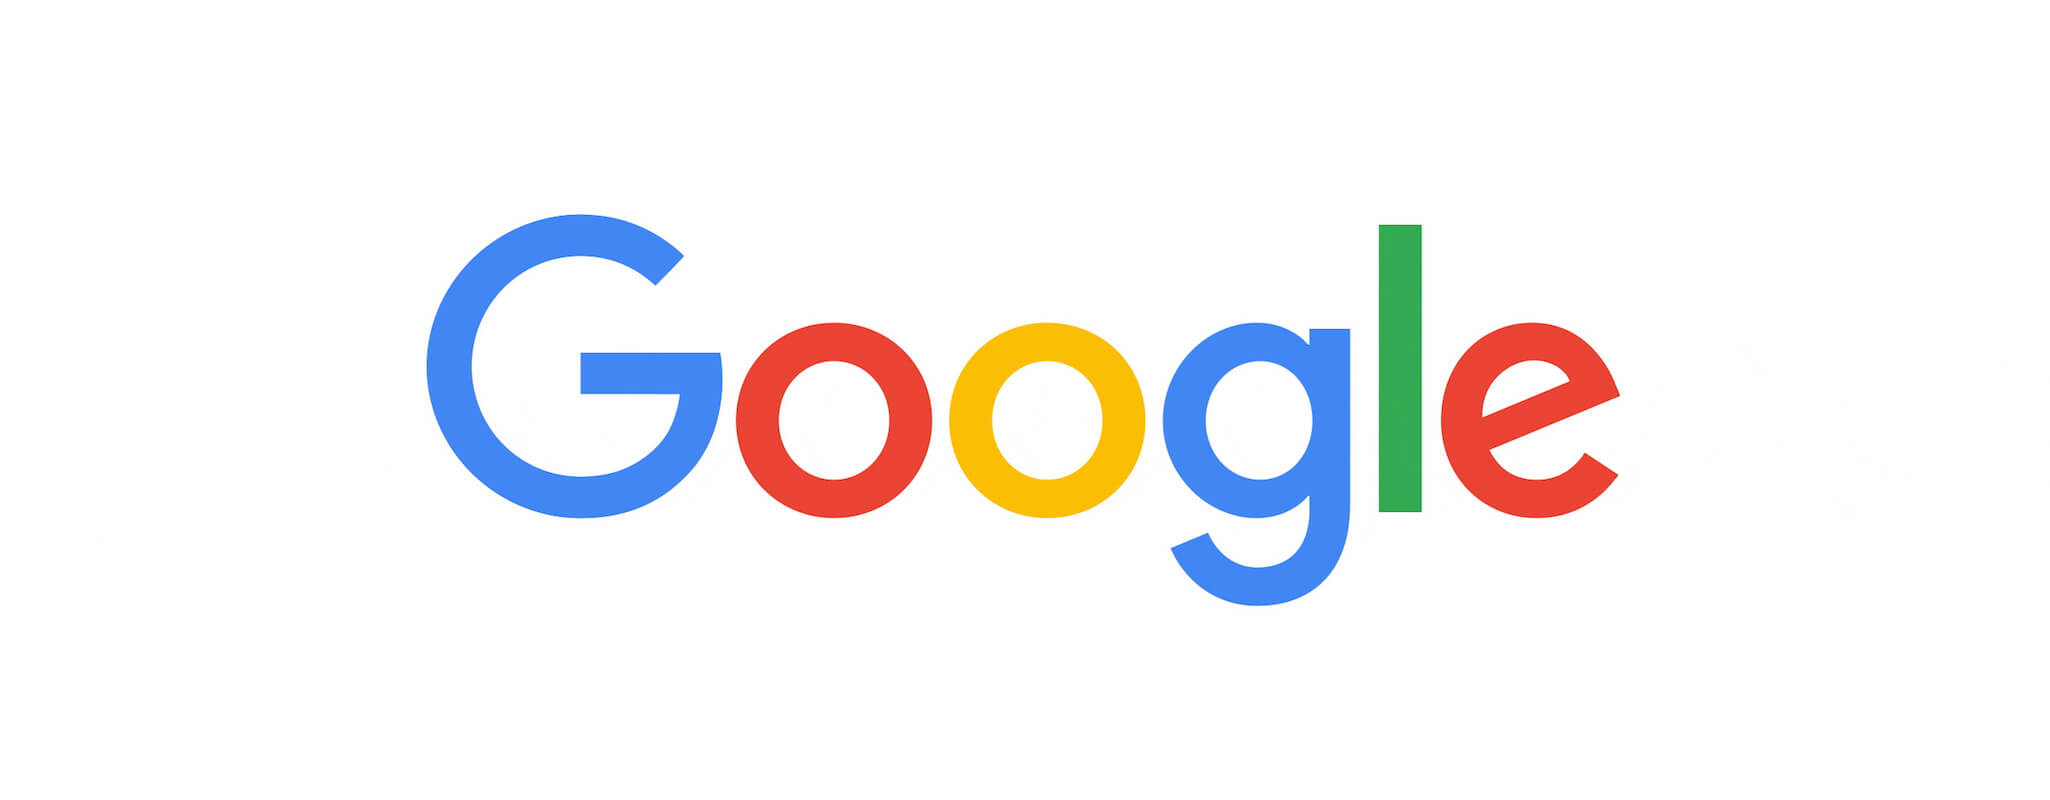 Google ABCs